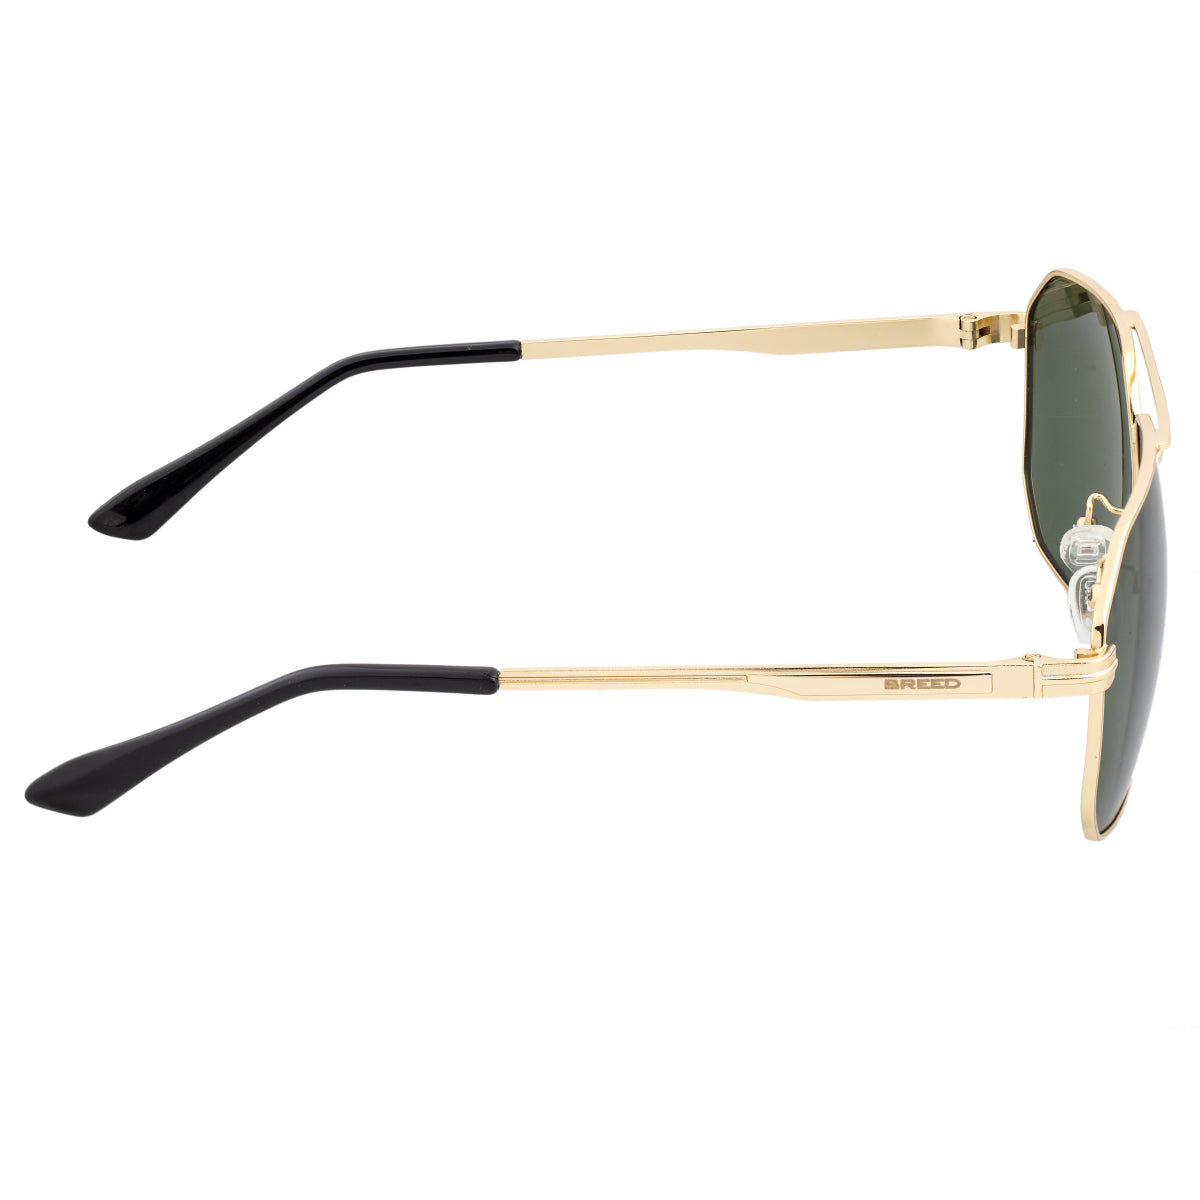 Breed Norma Polarized Sunglasses - Gold/Black - BSG064GD